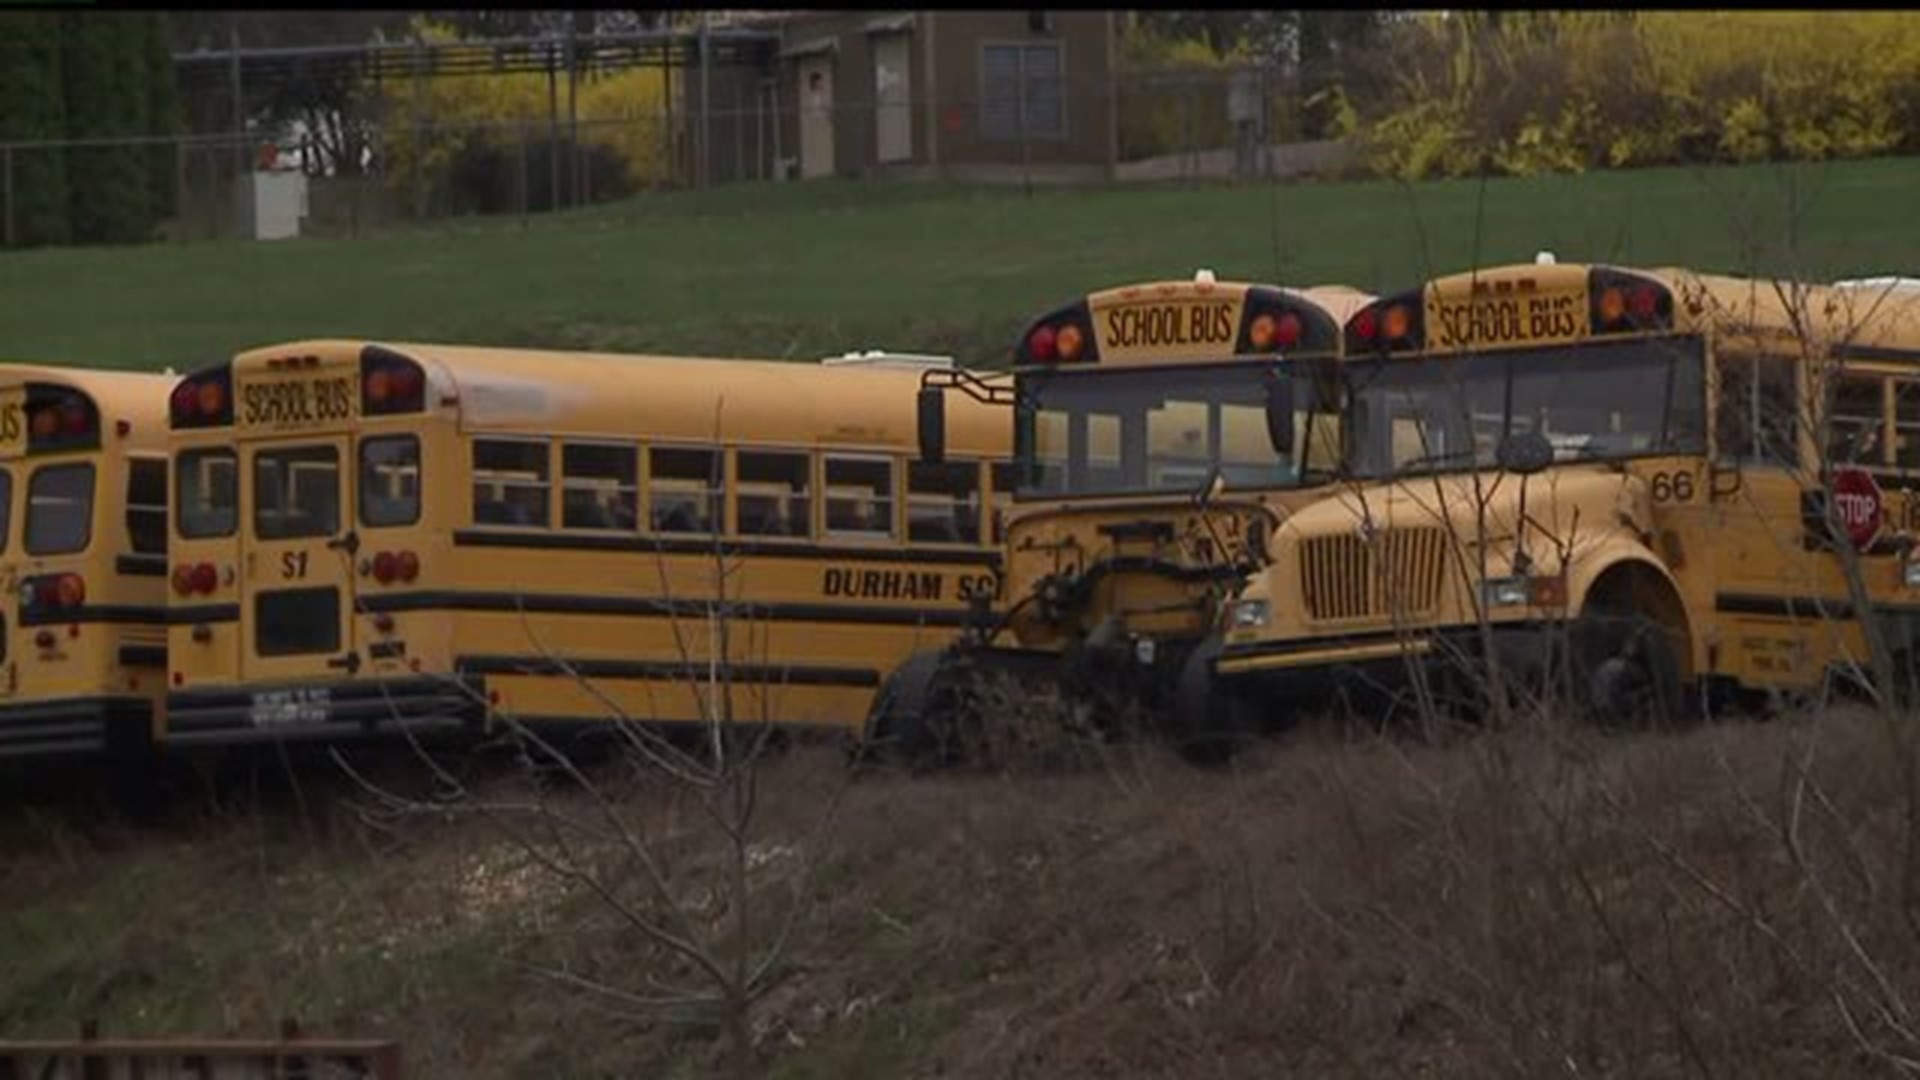 Dallastown School District and Durham School Services bus inspection update